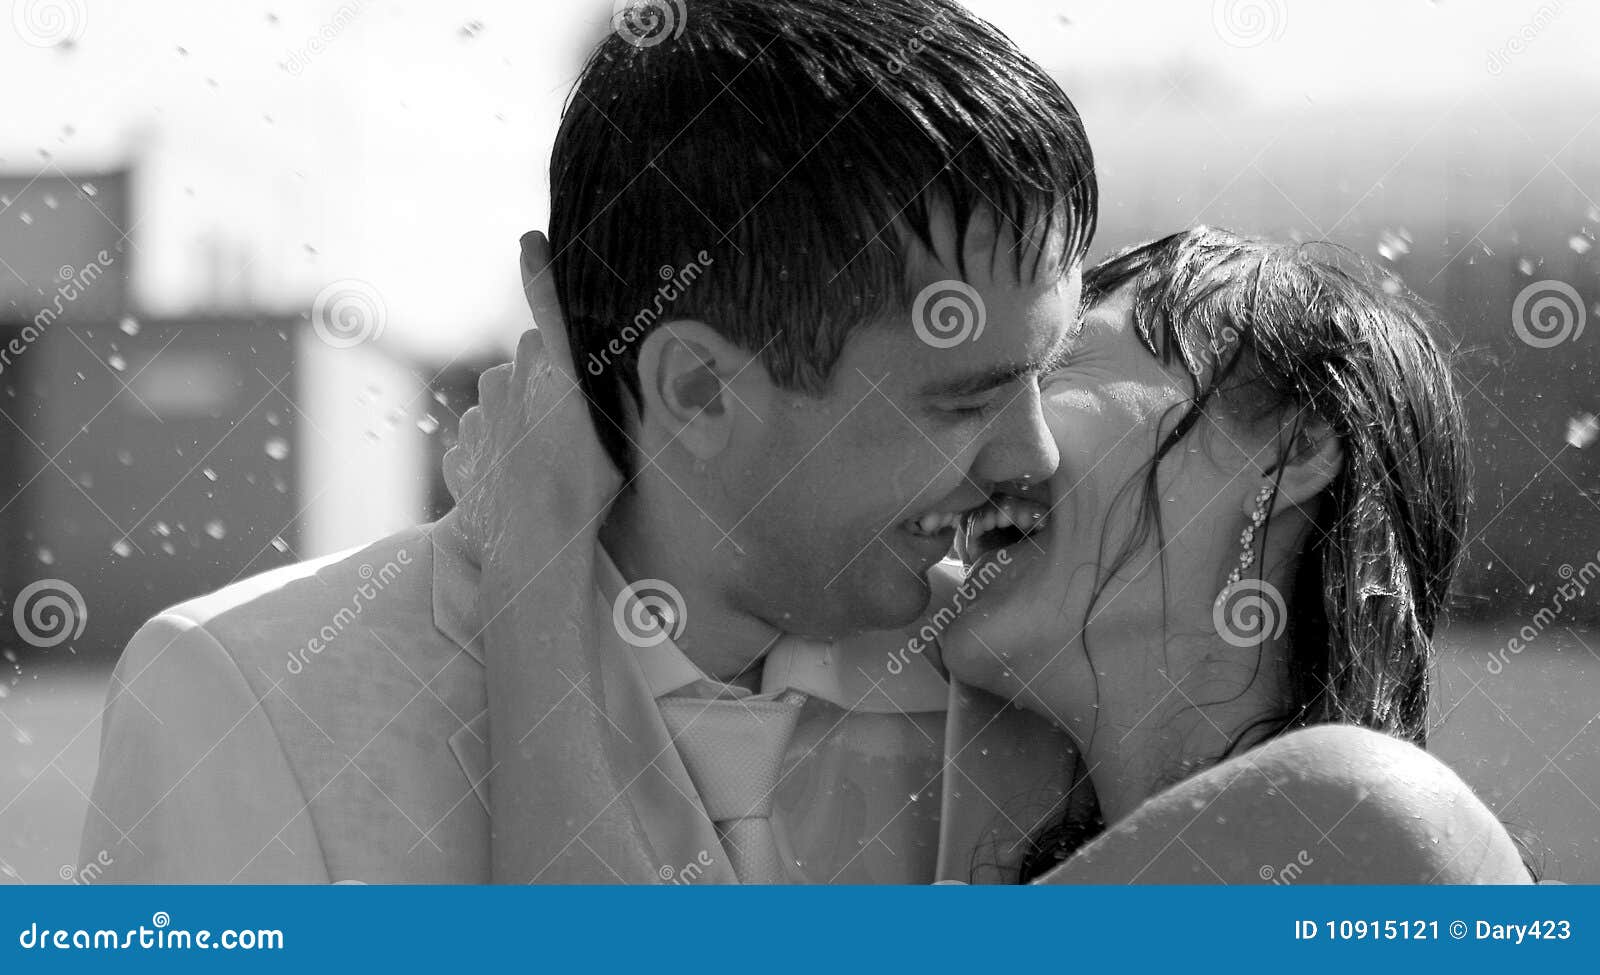 799 Kissing Rain Stock Photos - Free & Royalty-Free Stock Photos from  Dreamstime